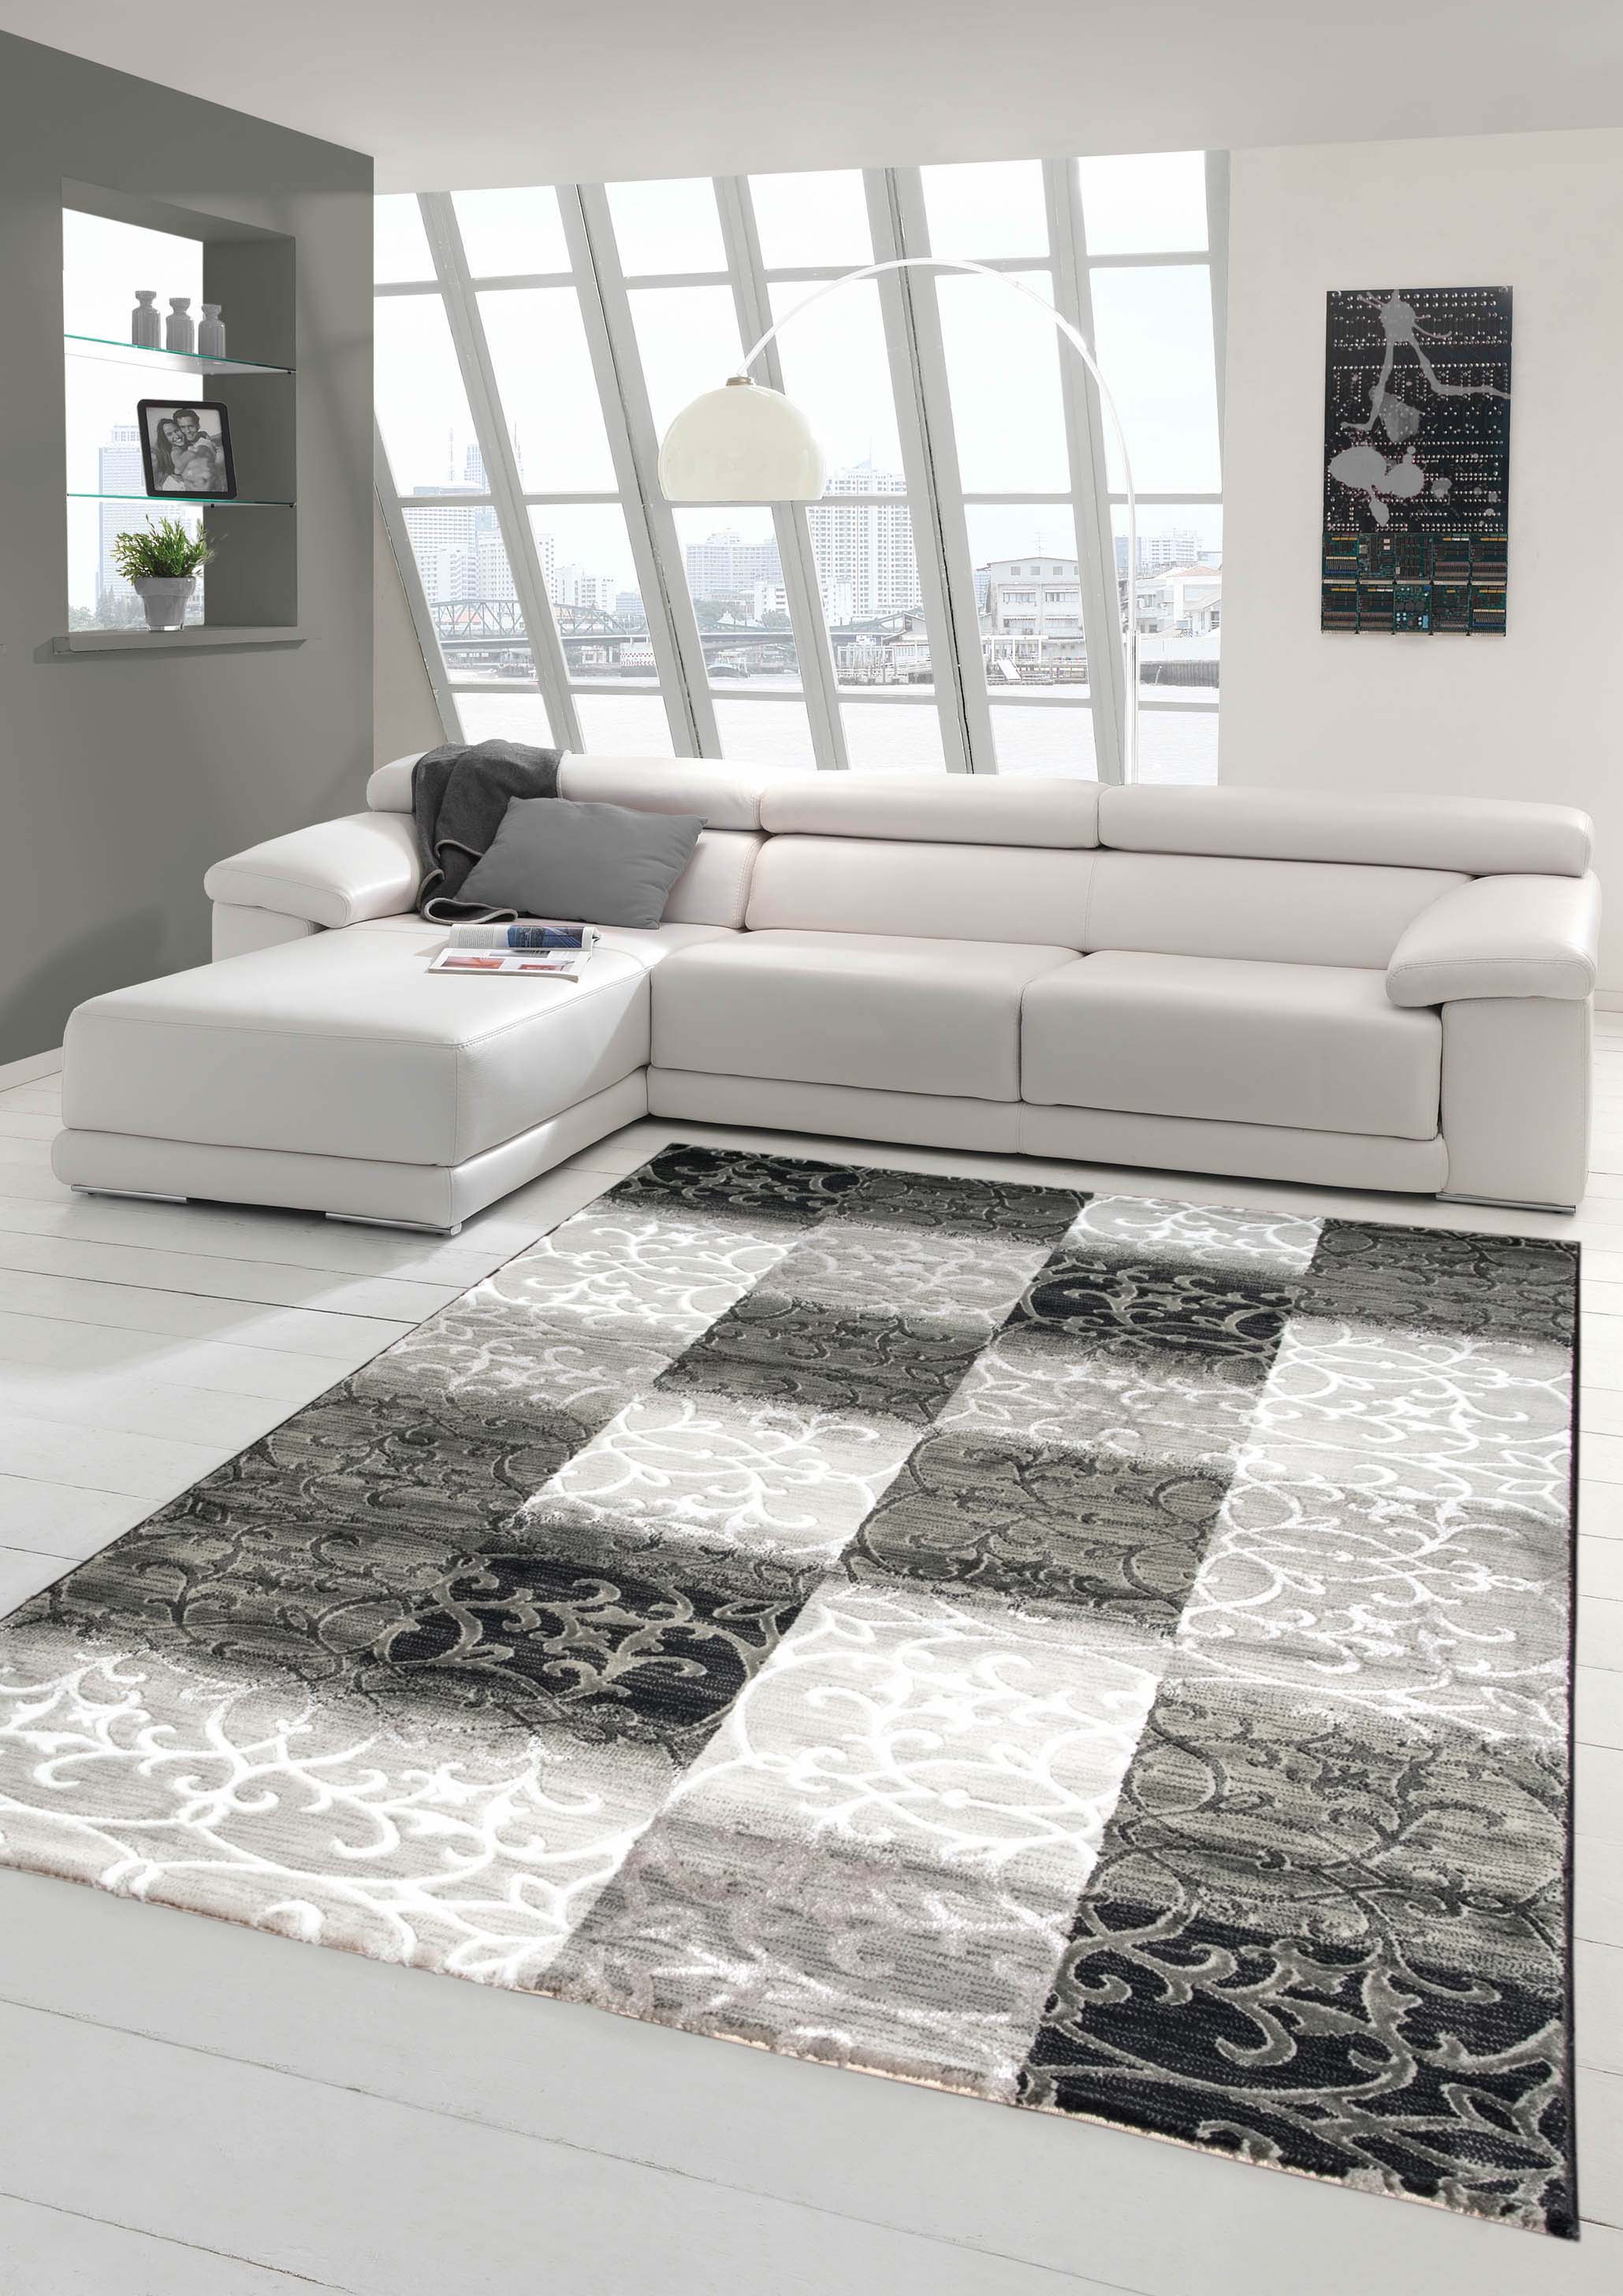 Modern & High-quality carpets: designer at -Traum - carpet Teppich dreams cheap and